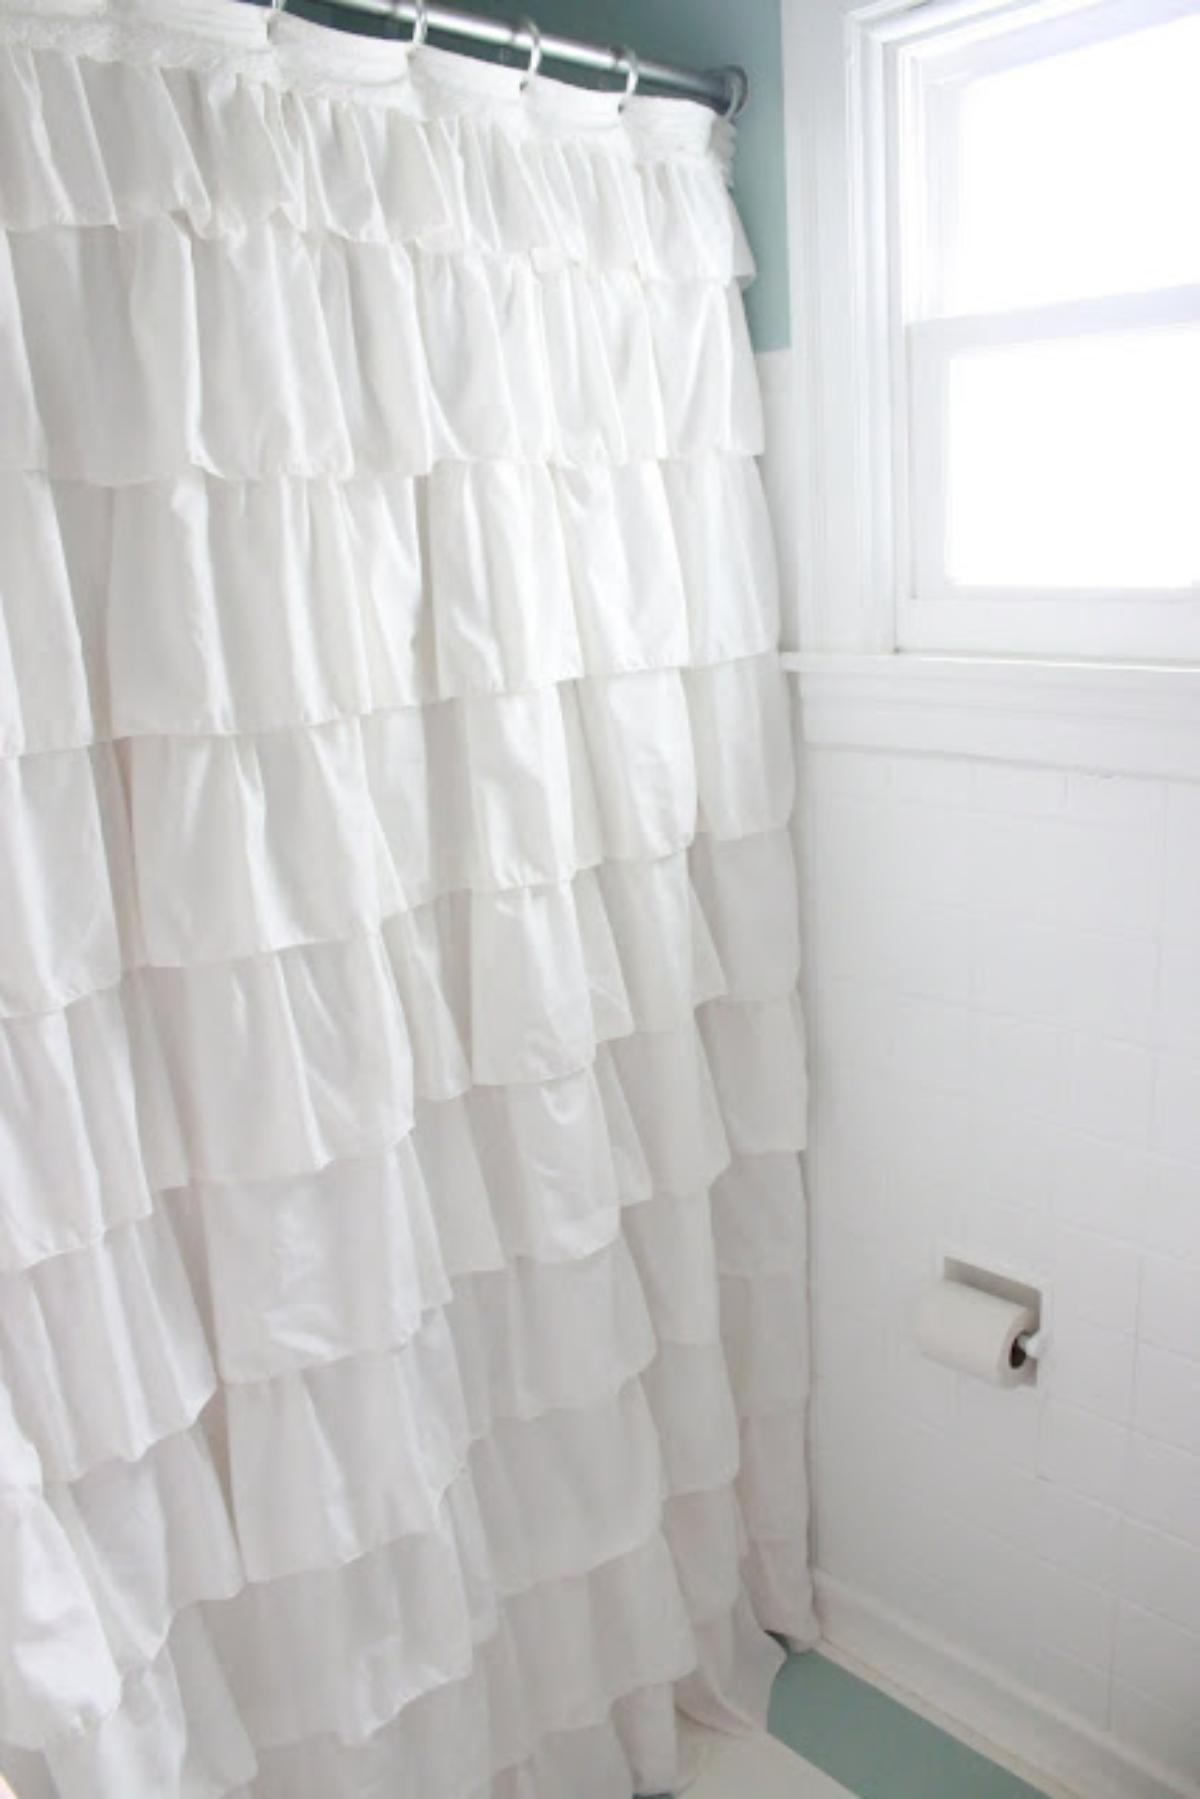 $1 Anthropologie-Esque Ruffled Shower Curtain